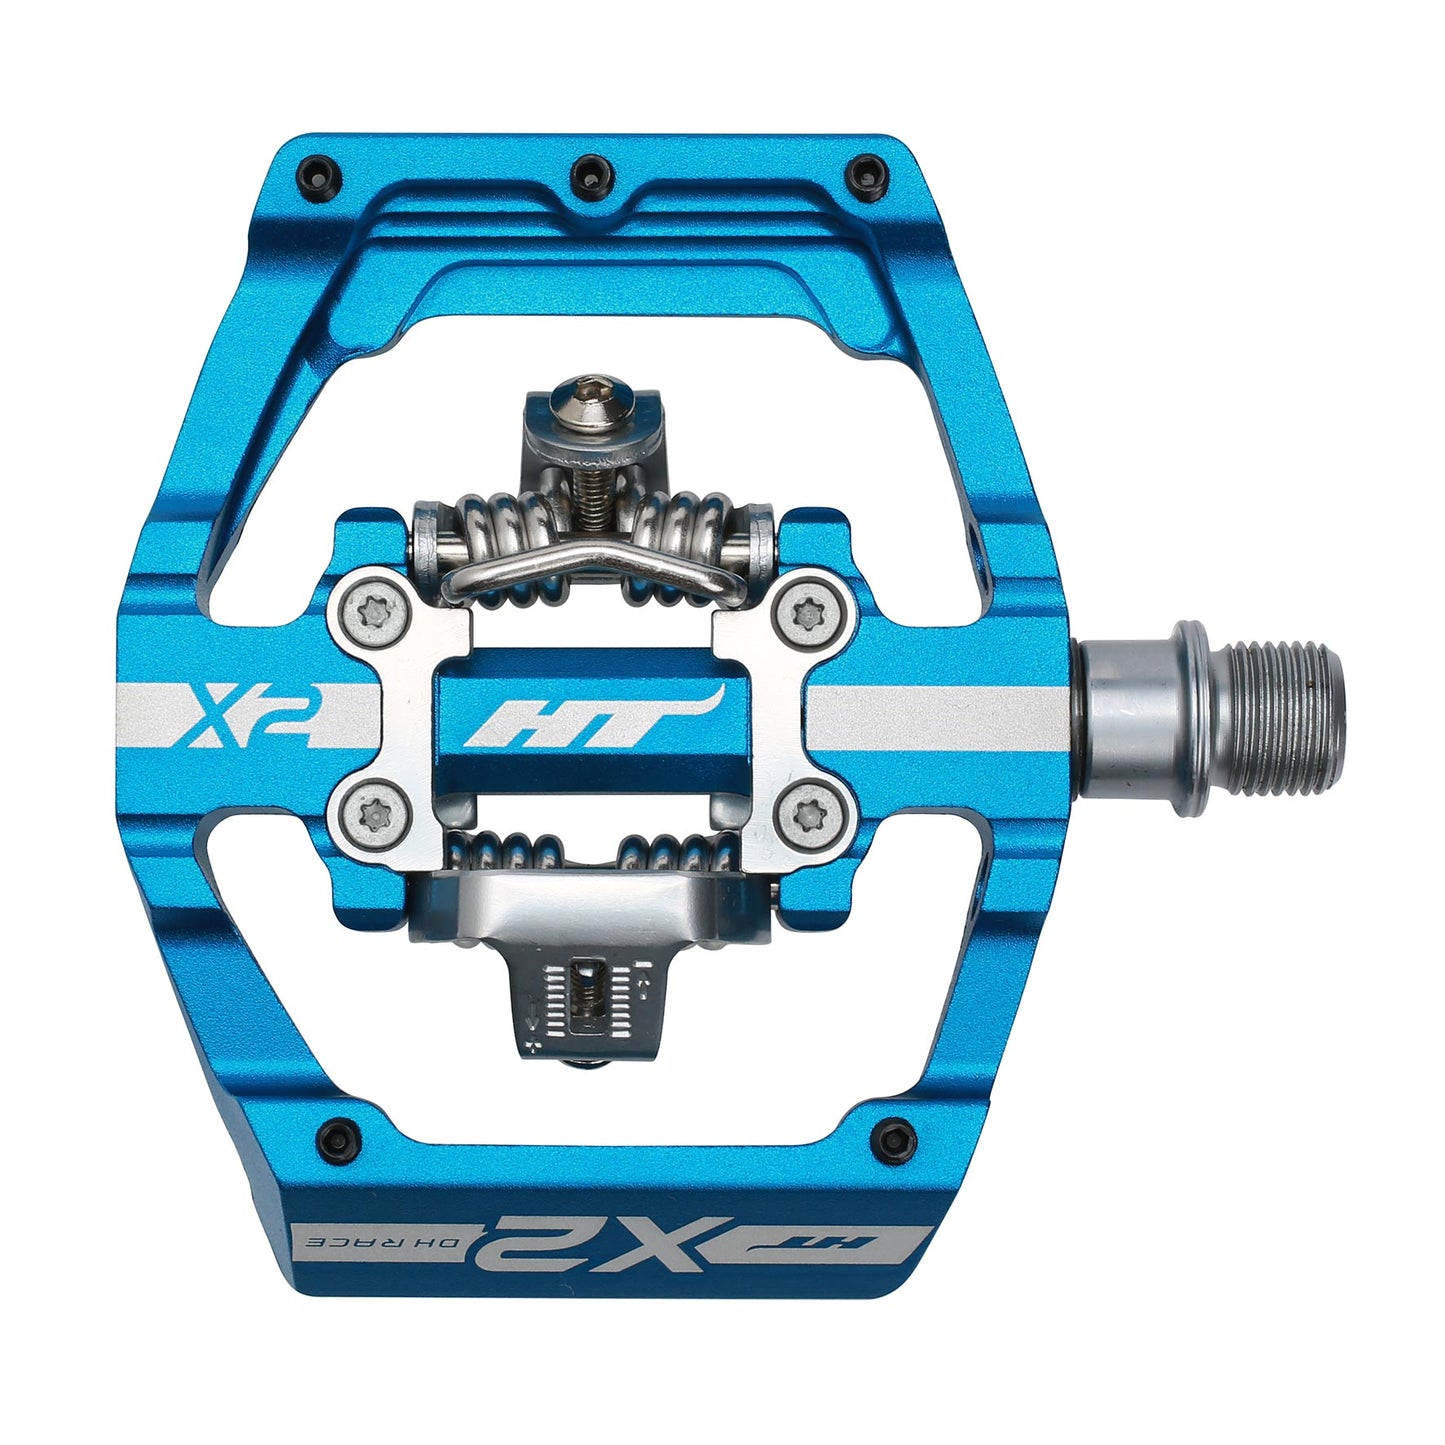 Ht X2 Pedals Alloy / CNC CRMO - Marine Blue